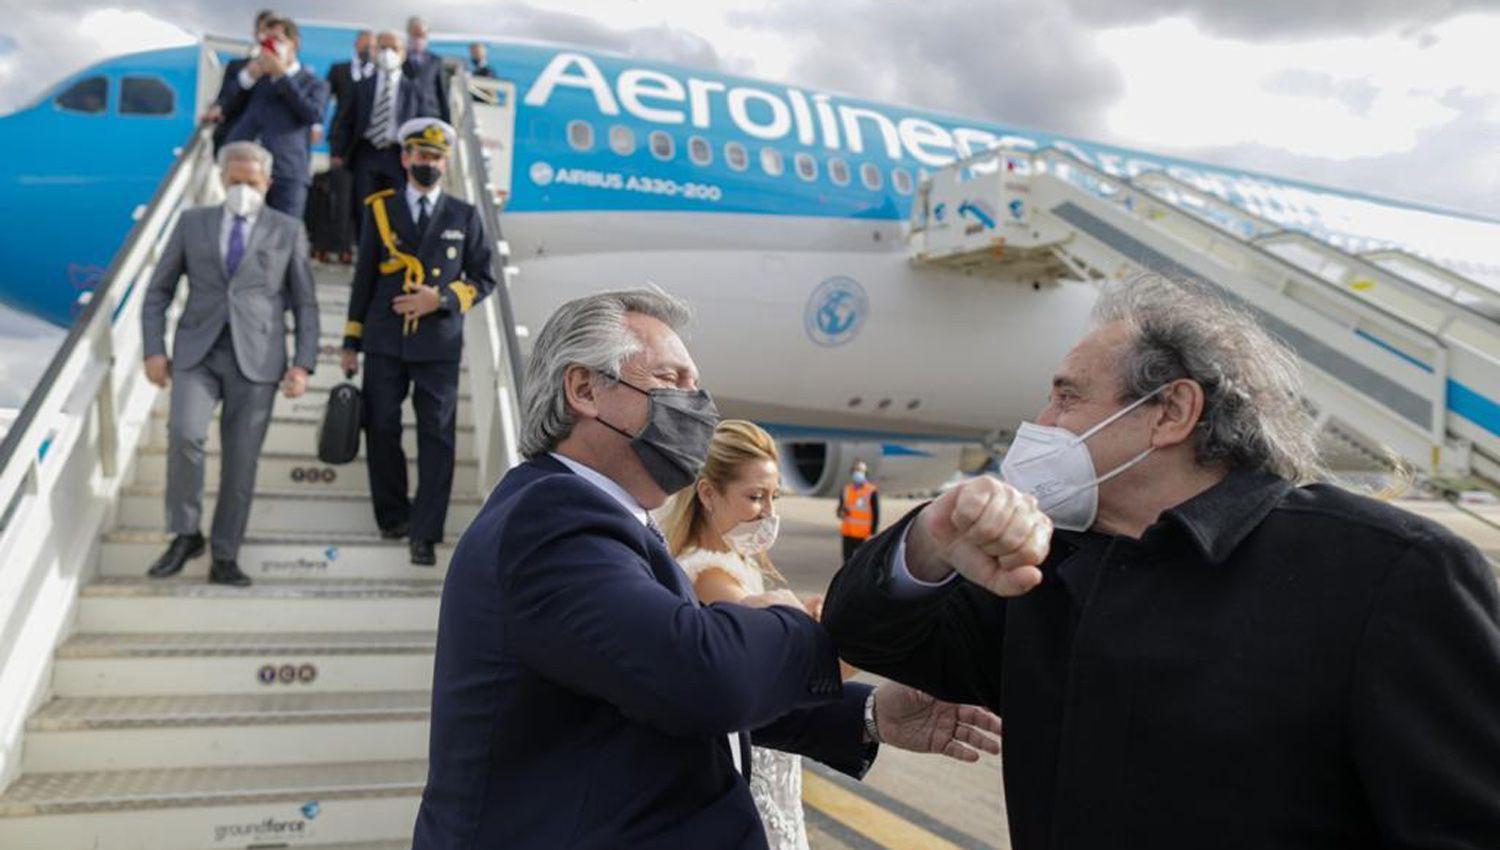 Alberto Fernaacutendez ya estaacute en Madrid para continuar su gira europea